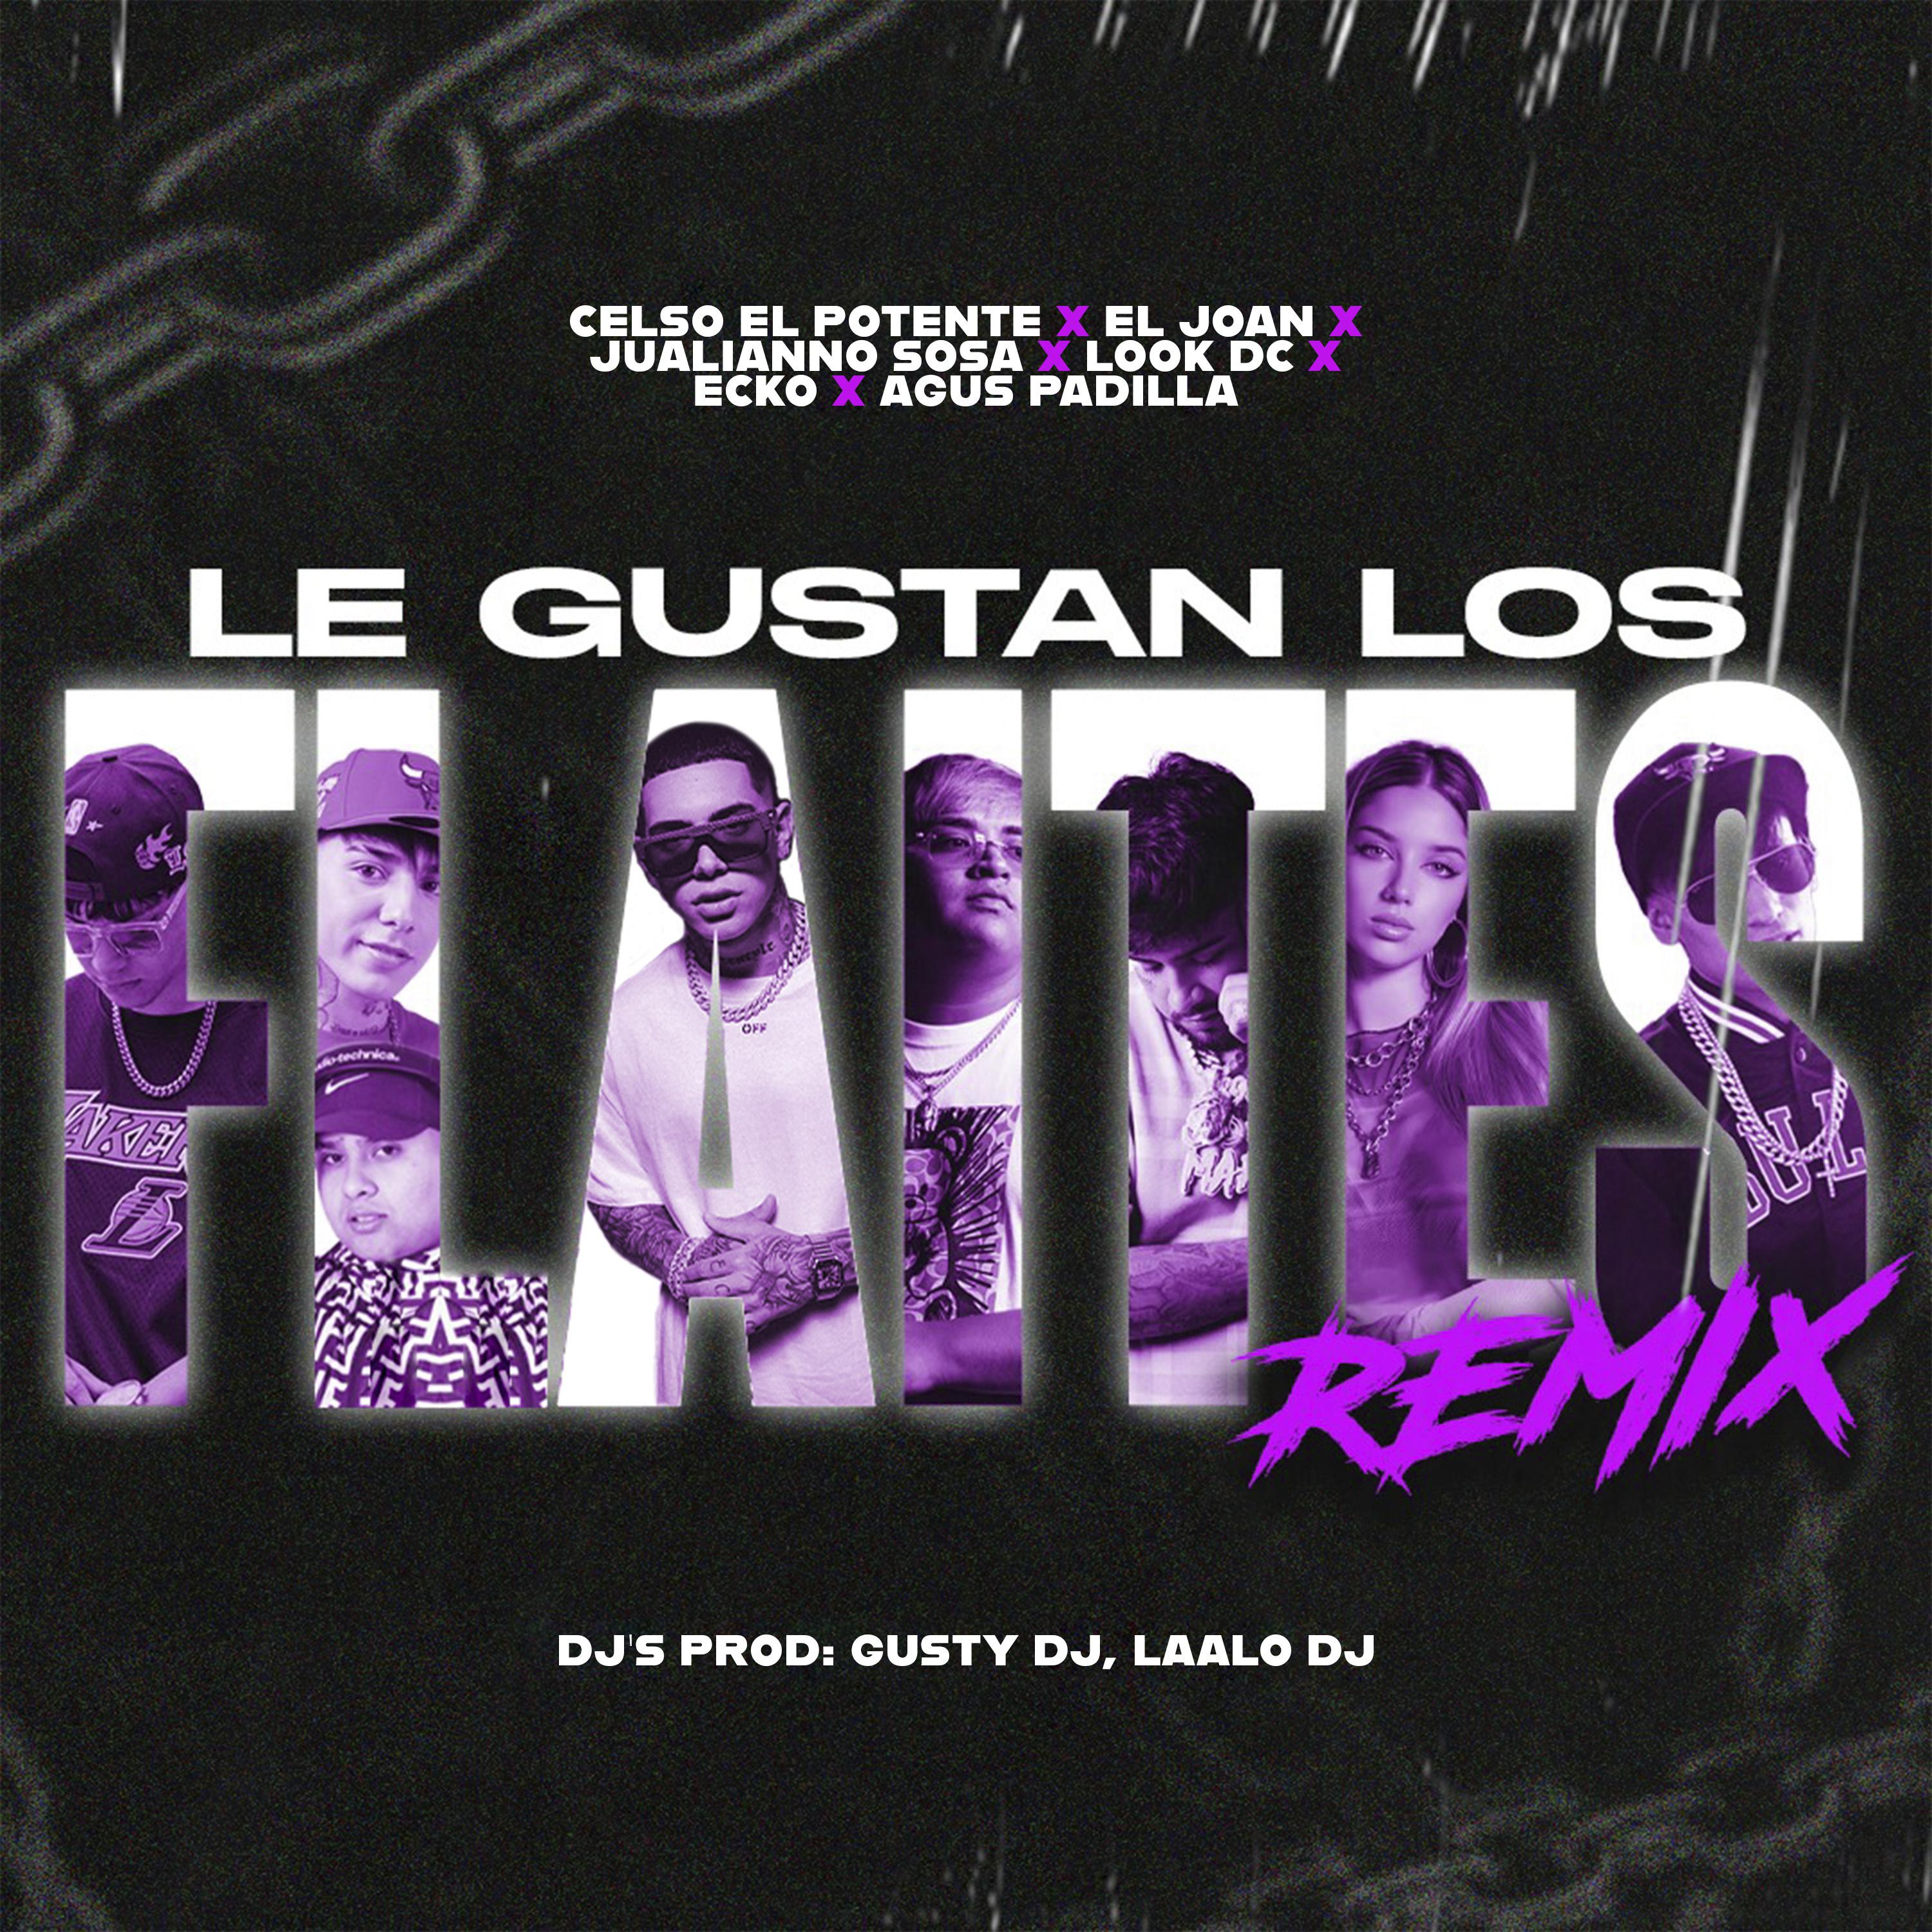 Celso El Potente - Le Gustan Lo' Flaites (feat. ECKO, Agus Padilla, Julianno Sosa, Look DC & LAALODJ) [Remix]